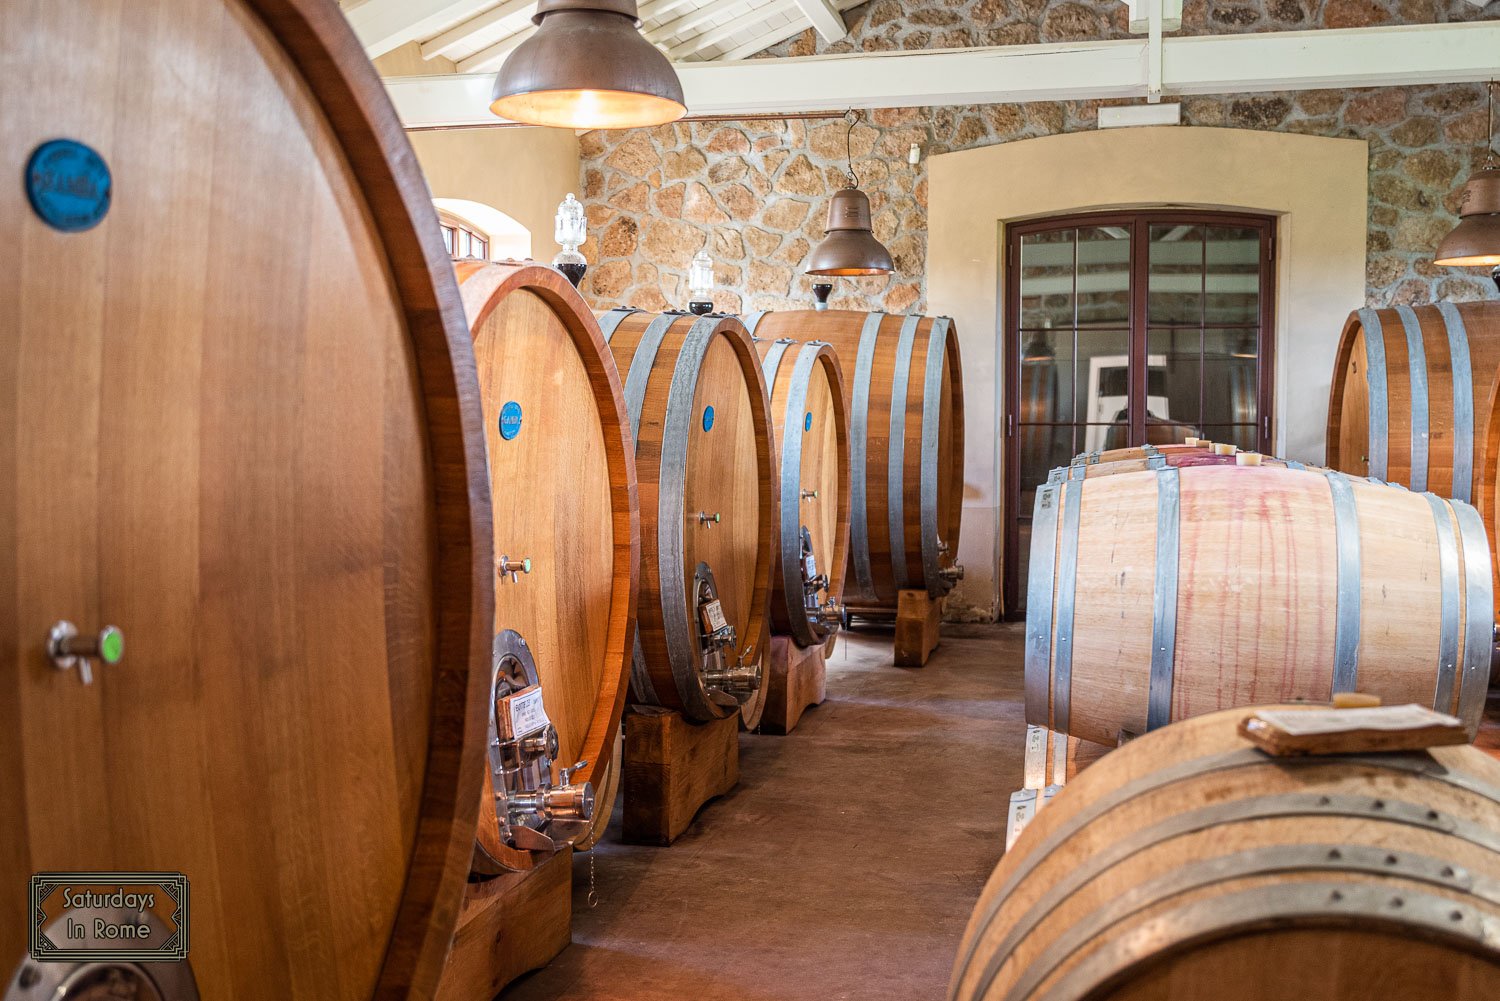 vineyards near rome italy - Barrels